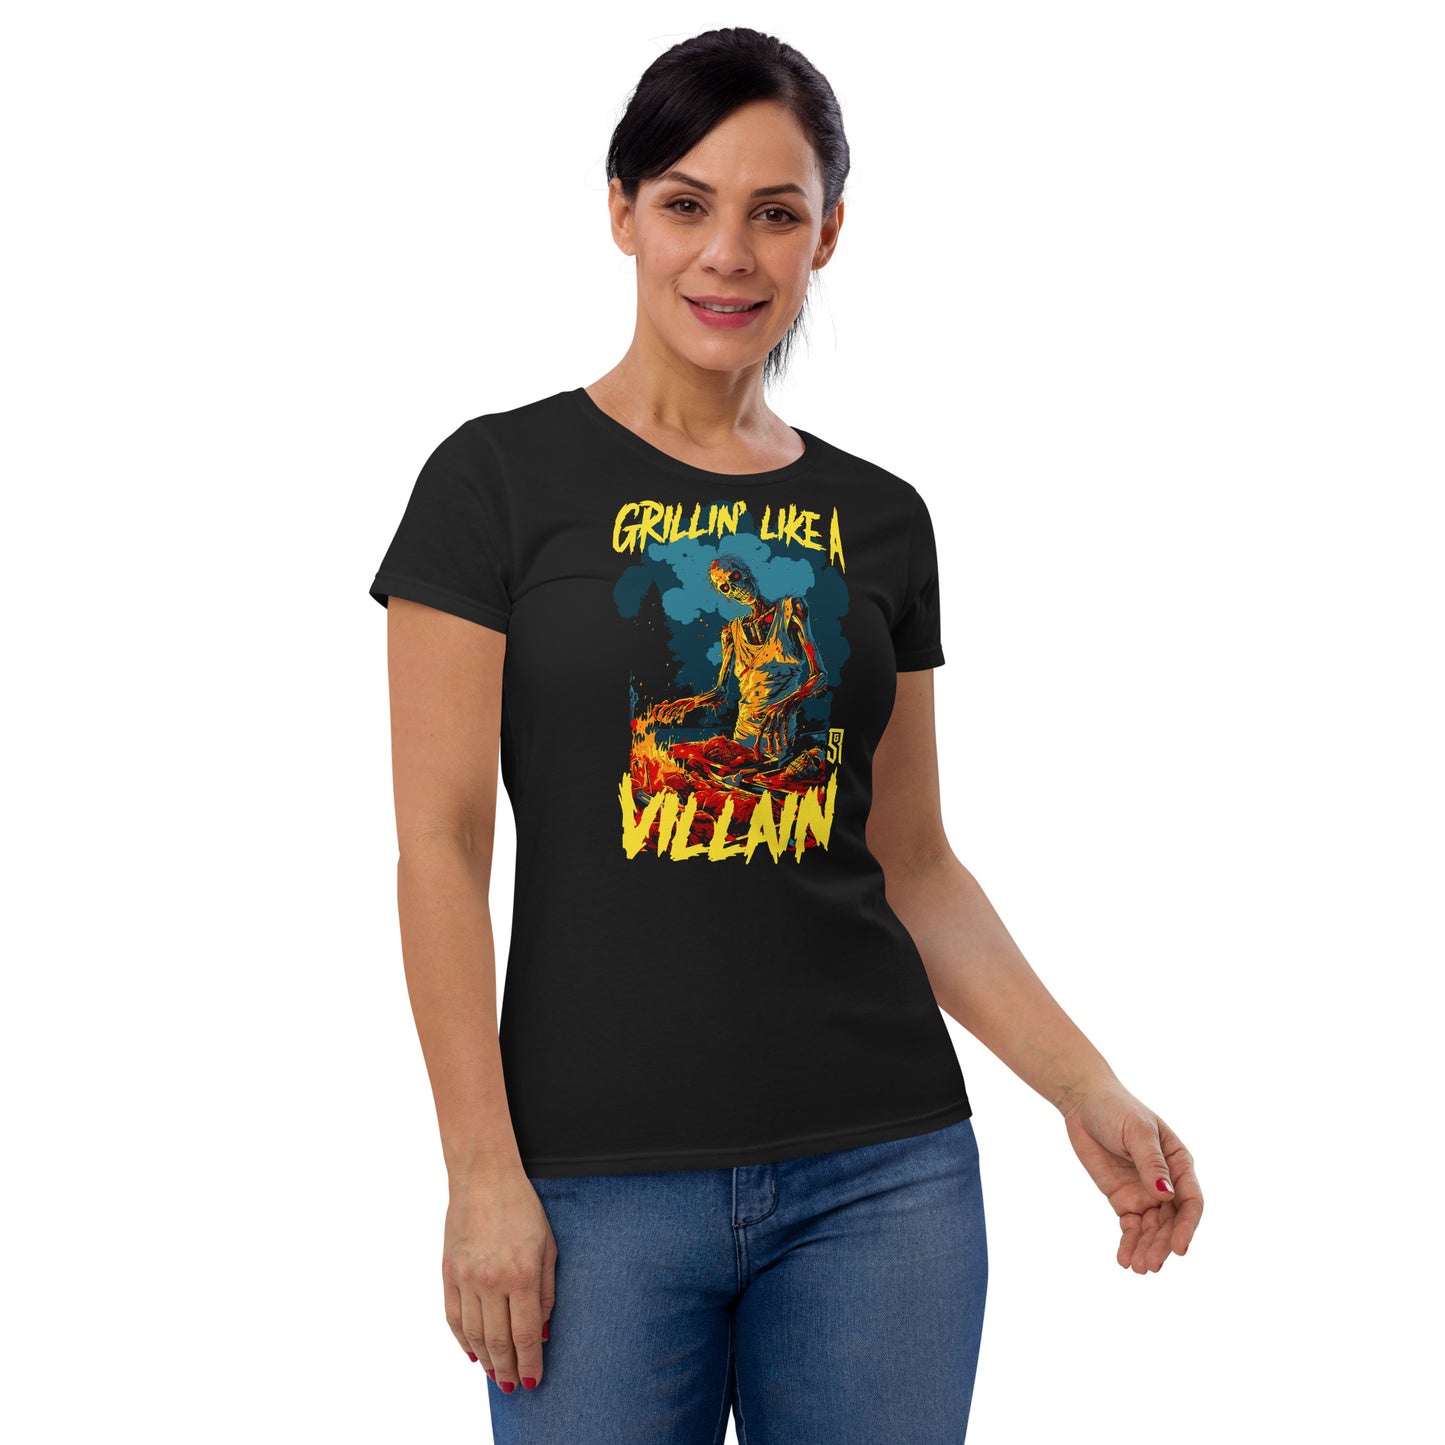 Grillin' like a Villain Zombie Women's Fashion Fit T-shirt